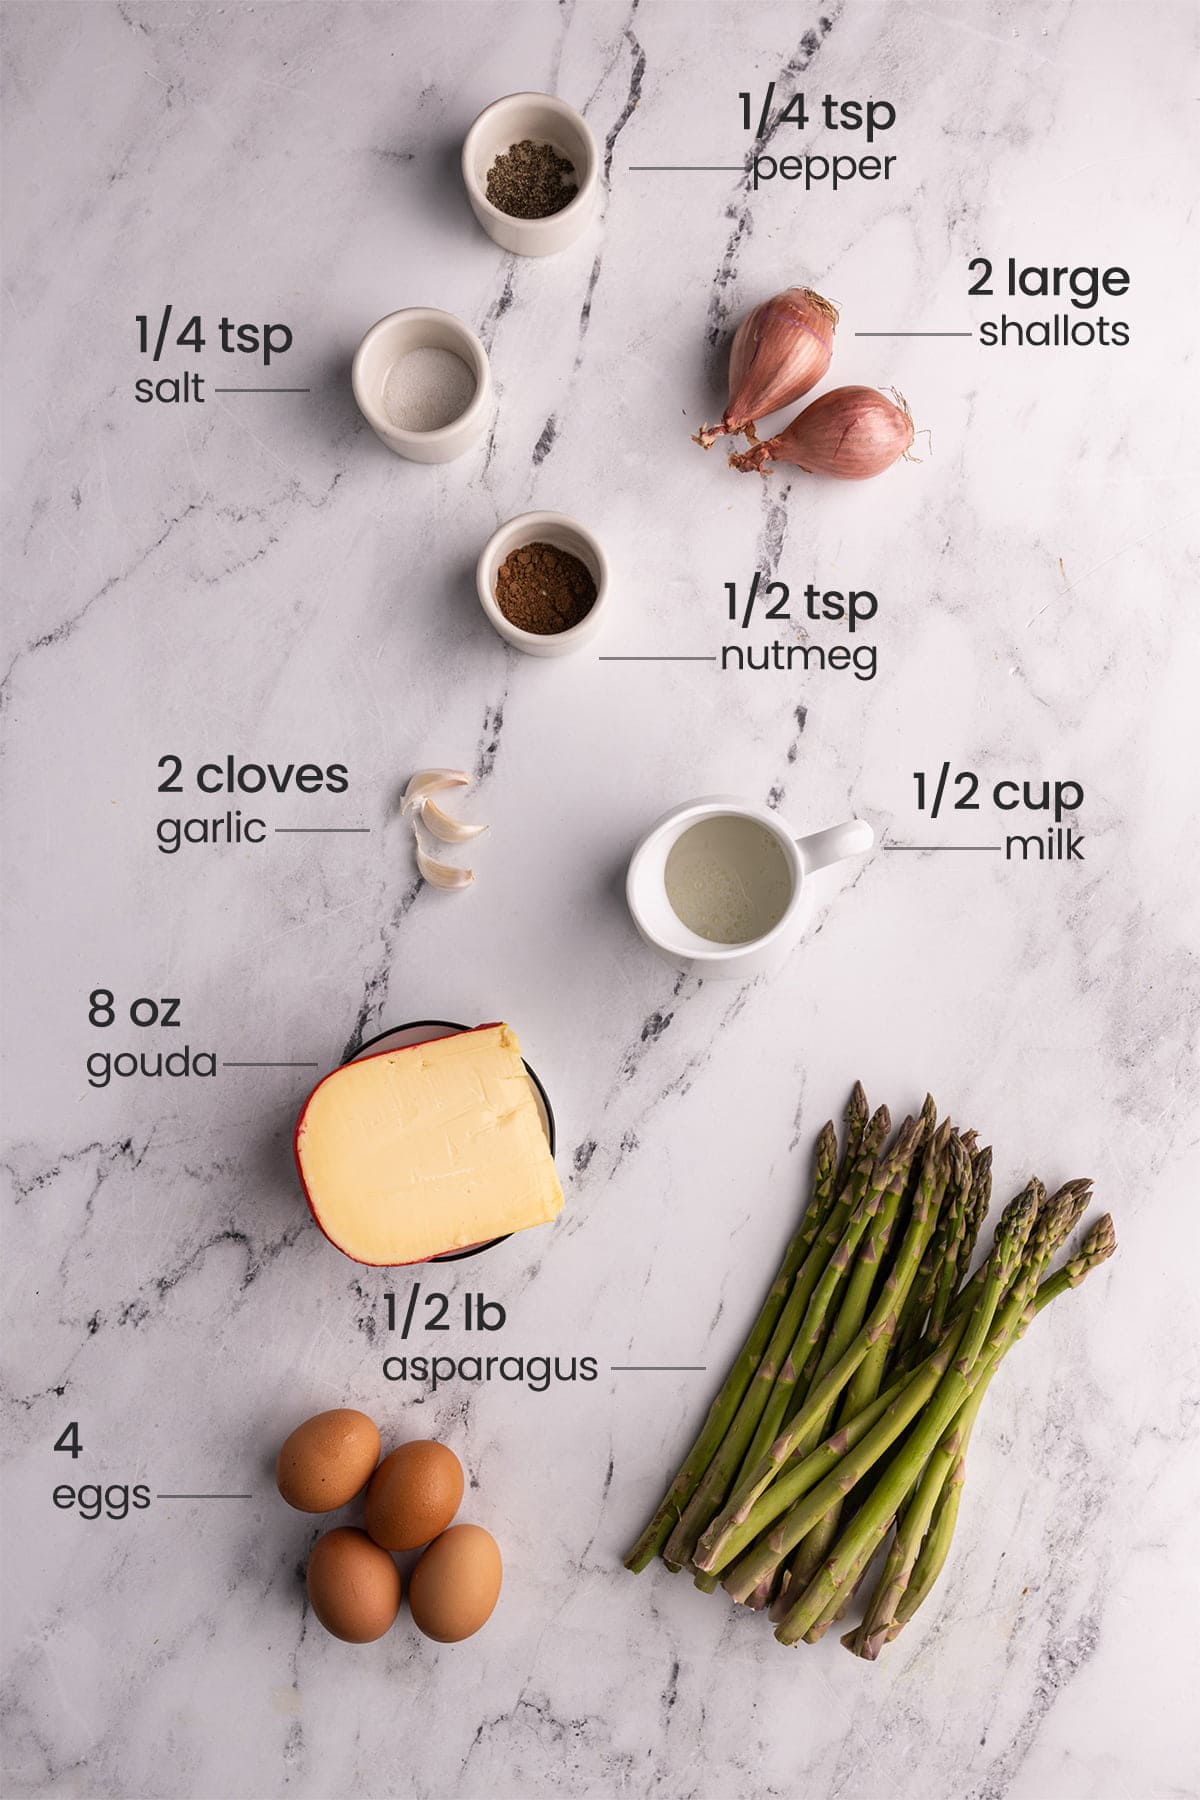 ingredients for asparagus quiche filling - pepper, shallots, salt, nutmeg, garlic, milk, gouda, asparagus, eggs